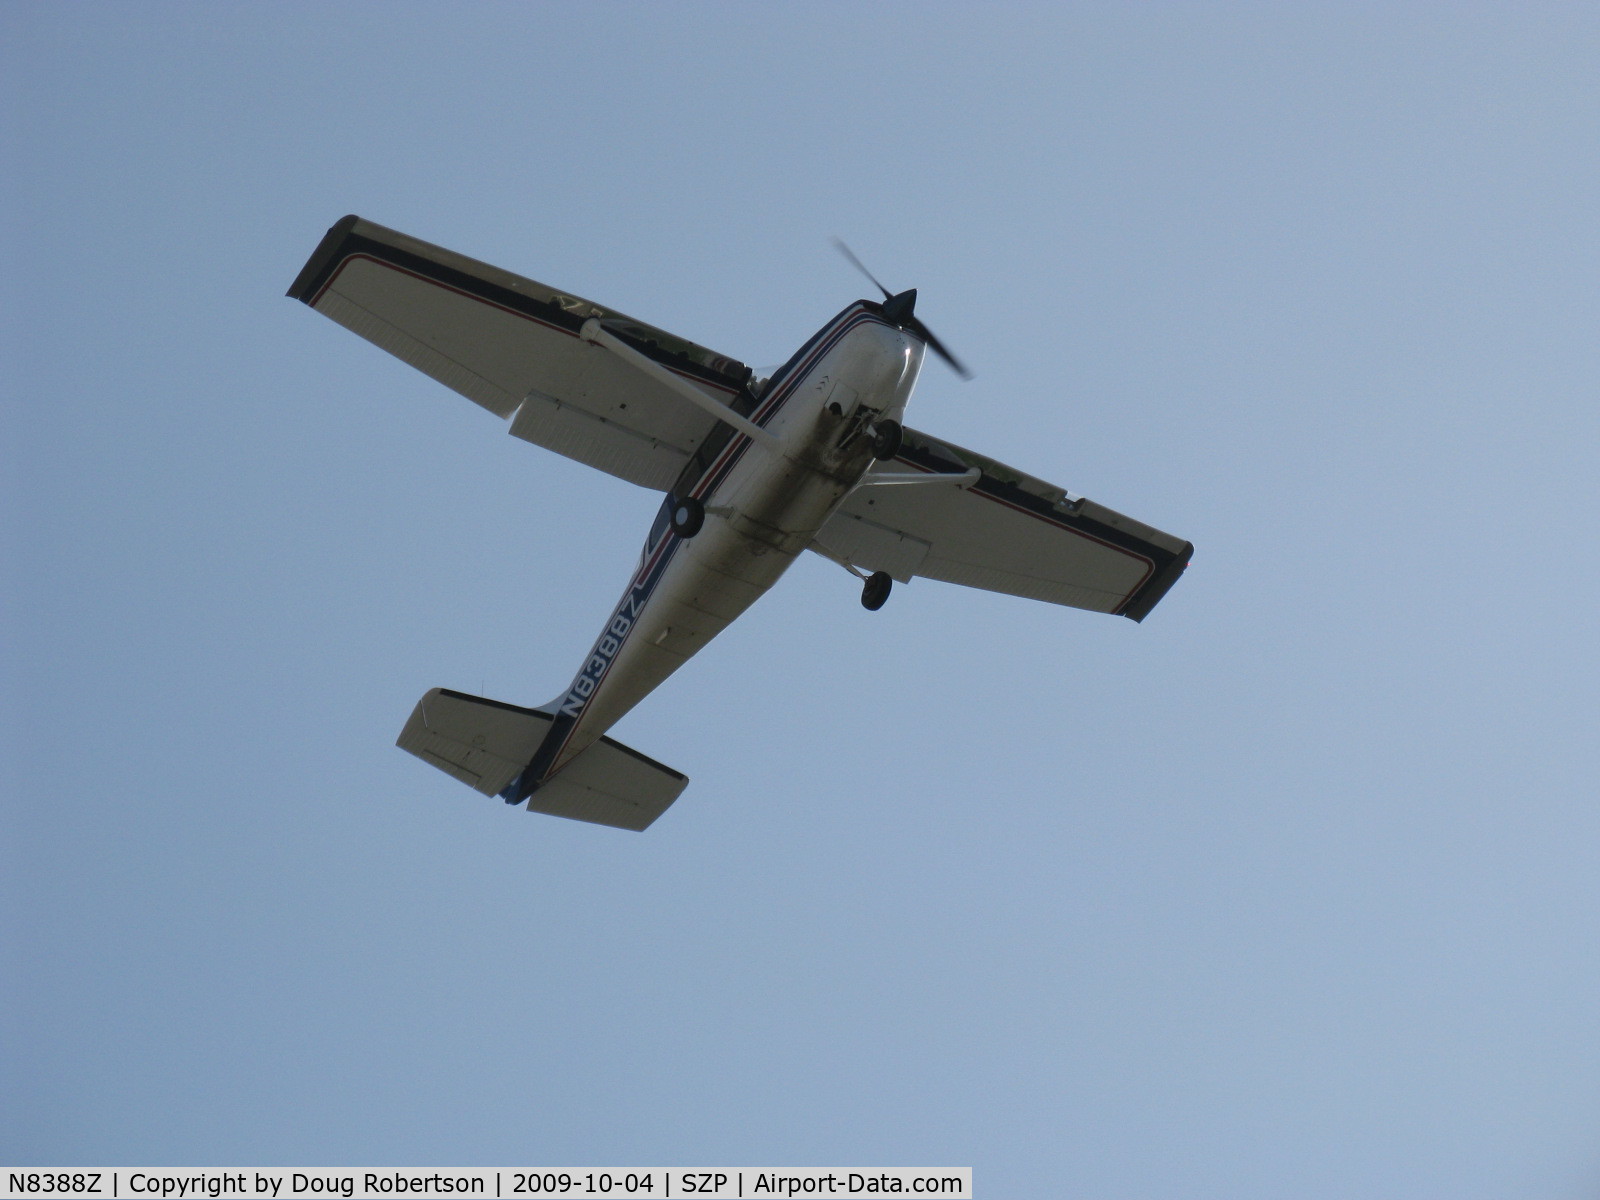 N8388Z, 1963 Cessna 210-5 C/N 205-0388, 1963 Cessna 210-5 (205) UTILINE (fixed gear version of 210C), Continental IO-470-E 260 Hp, takeoff climb Rwy 22